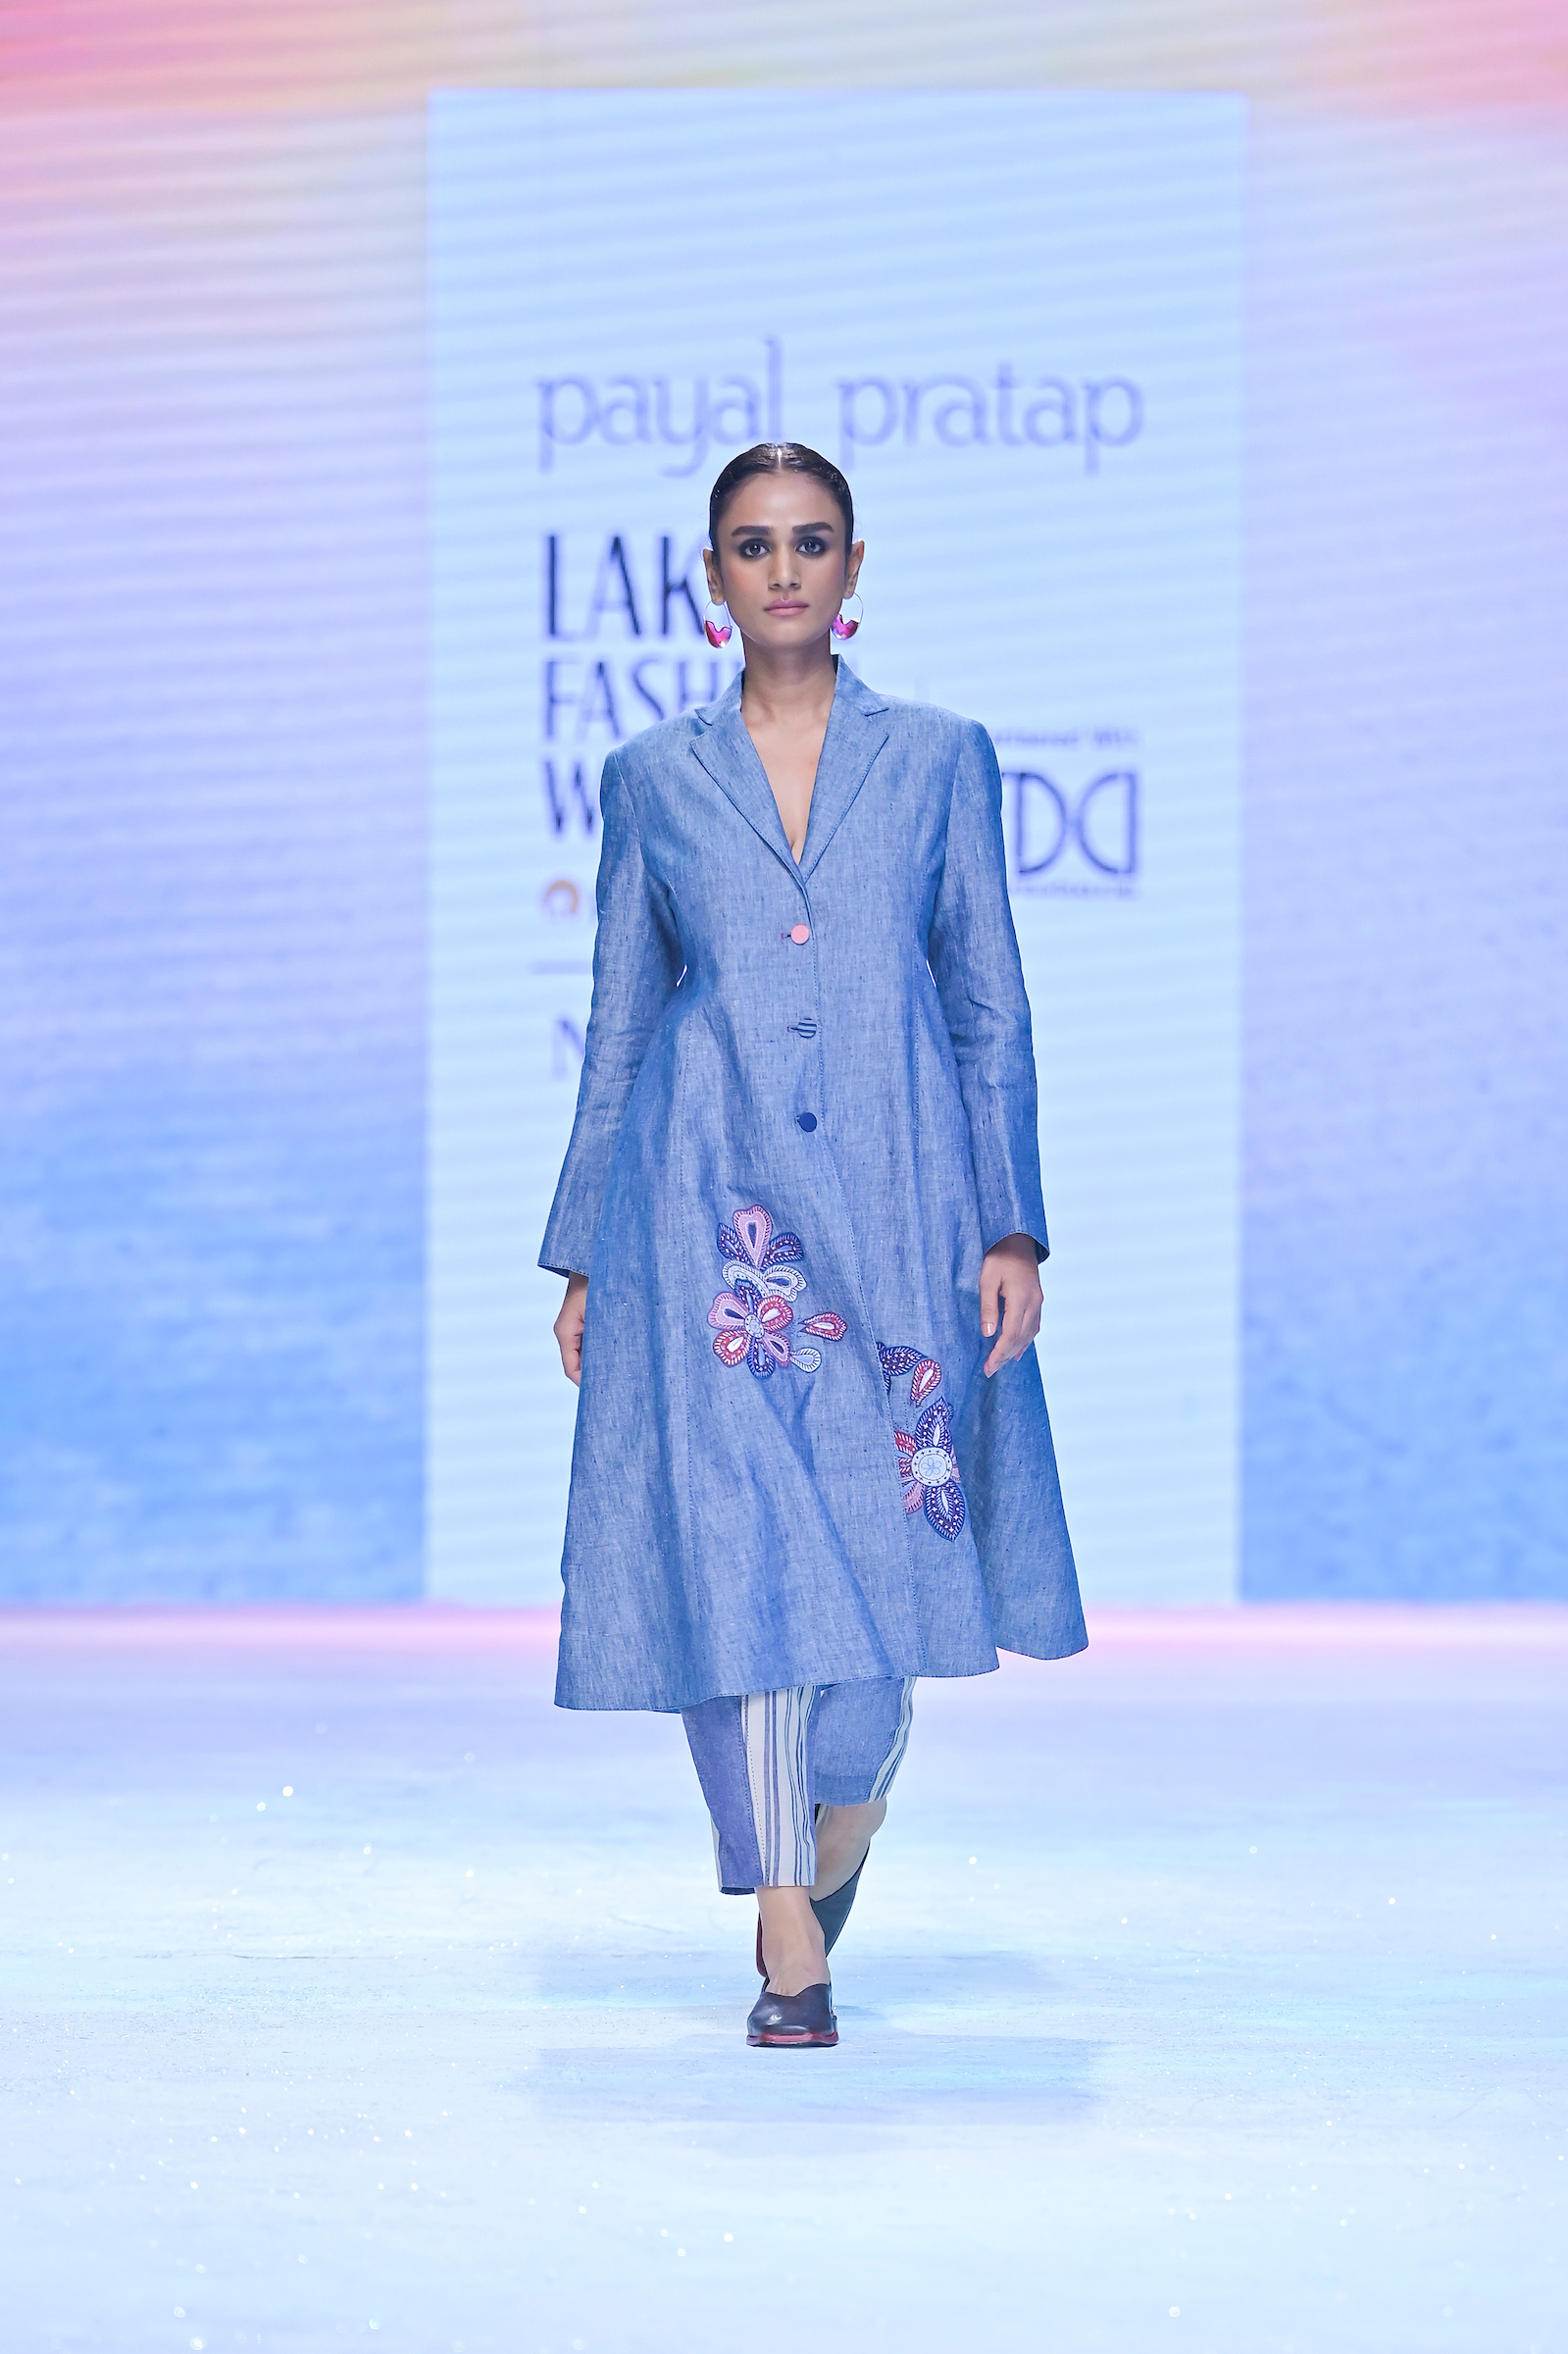 A model walks the ramp in Payal Pratap's collection at Lakmé Fashion Week x FDCI